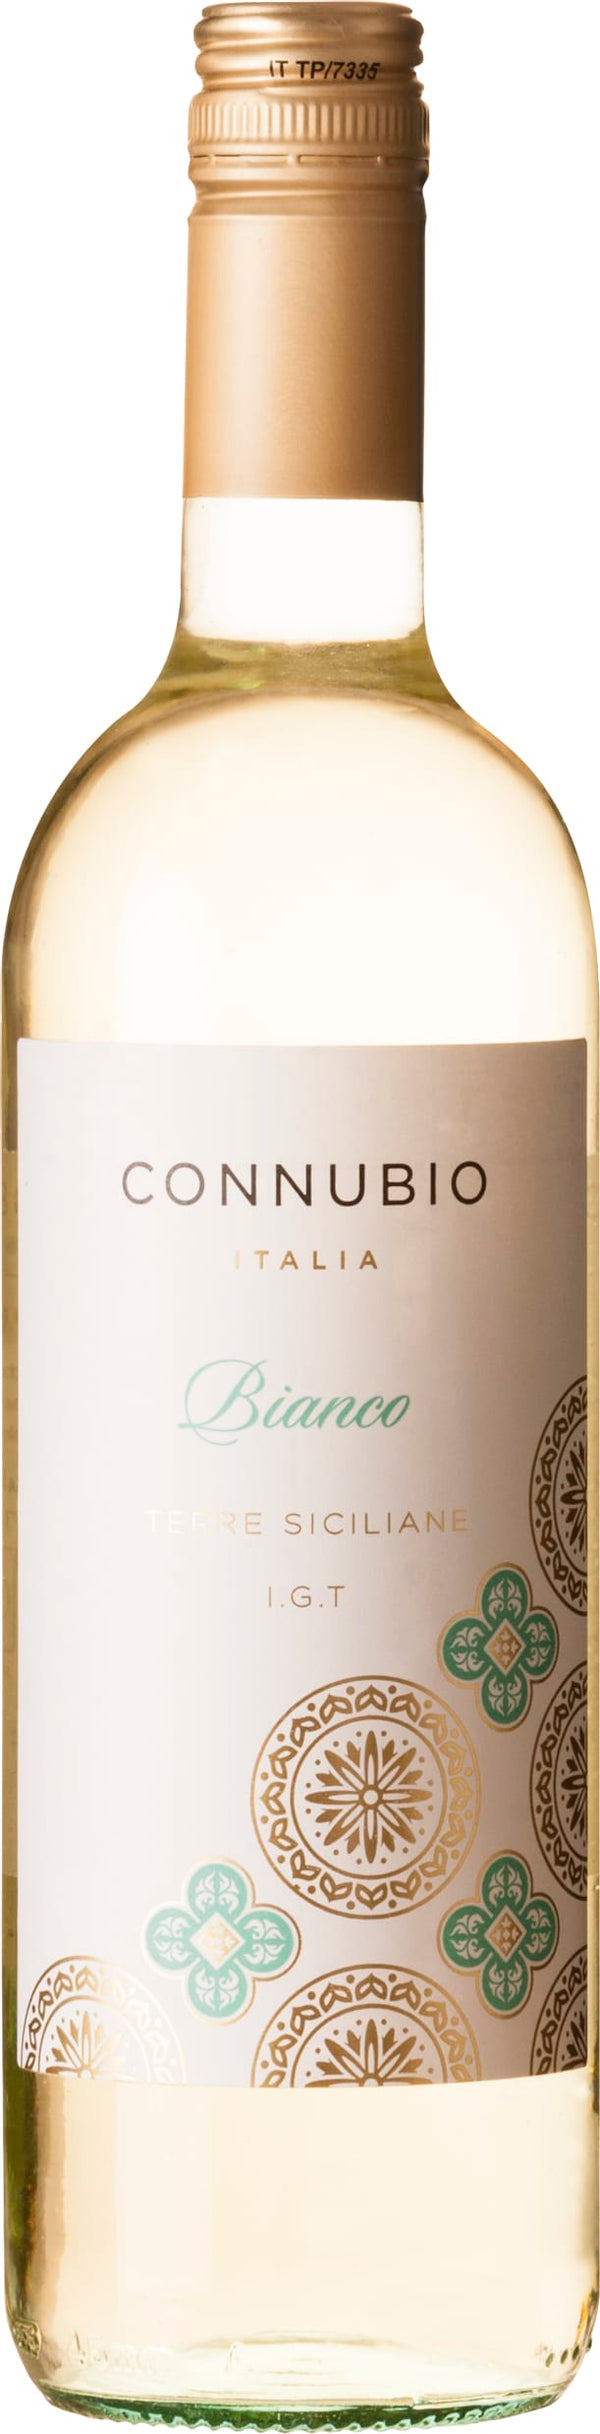 Bianco IGT Terre Siciliane 22 Connubio 6x75cl - Just Wines 